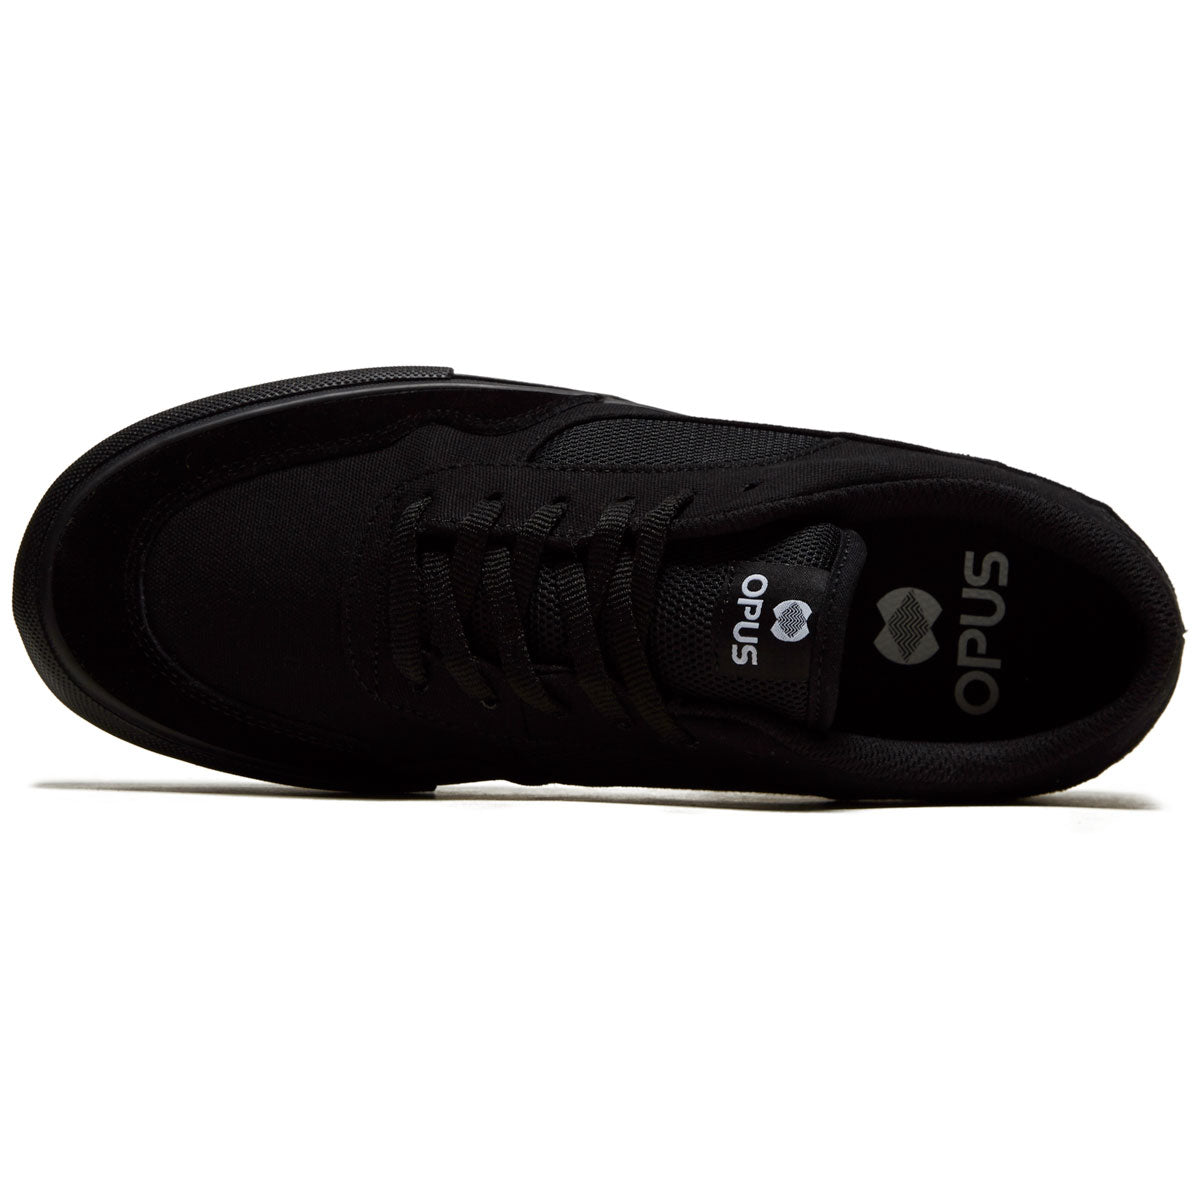 Opus Standard Low Shoes - Black/Black image 3